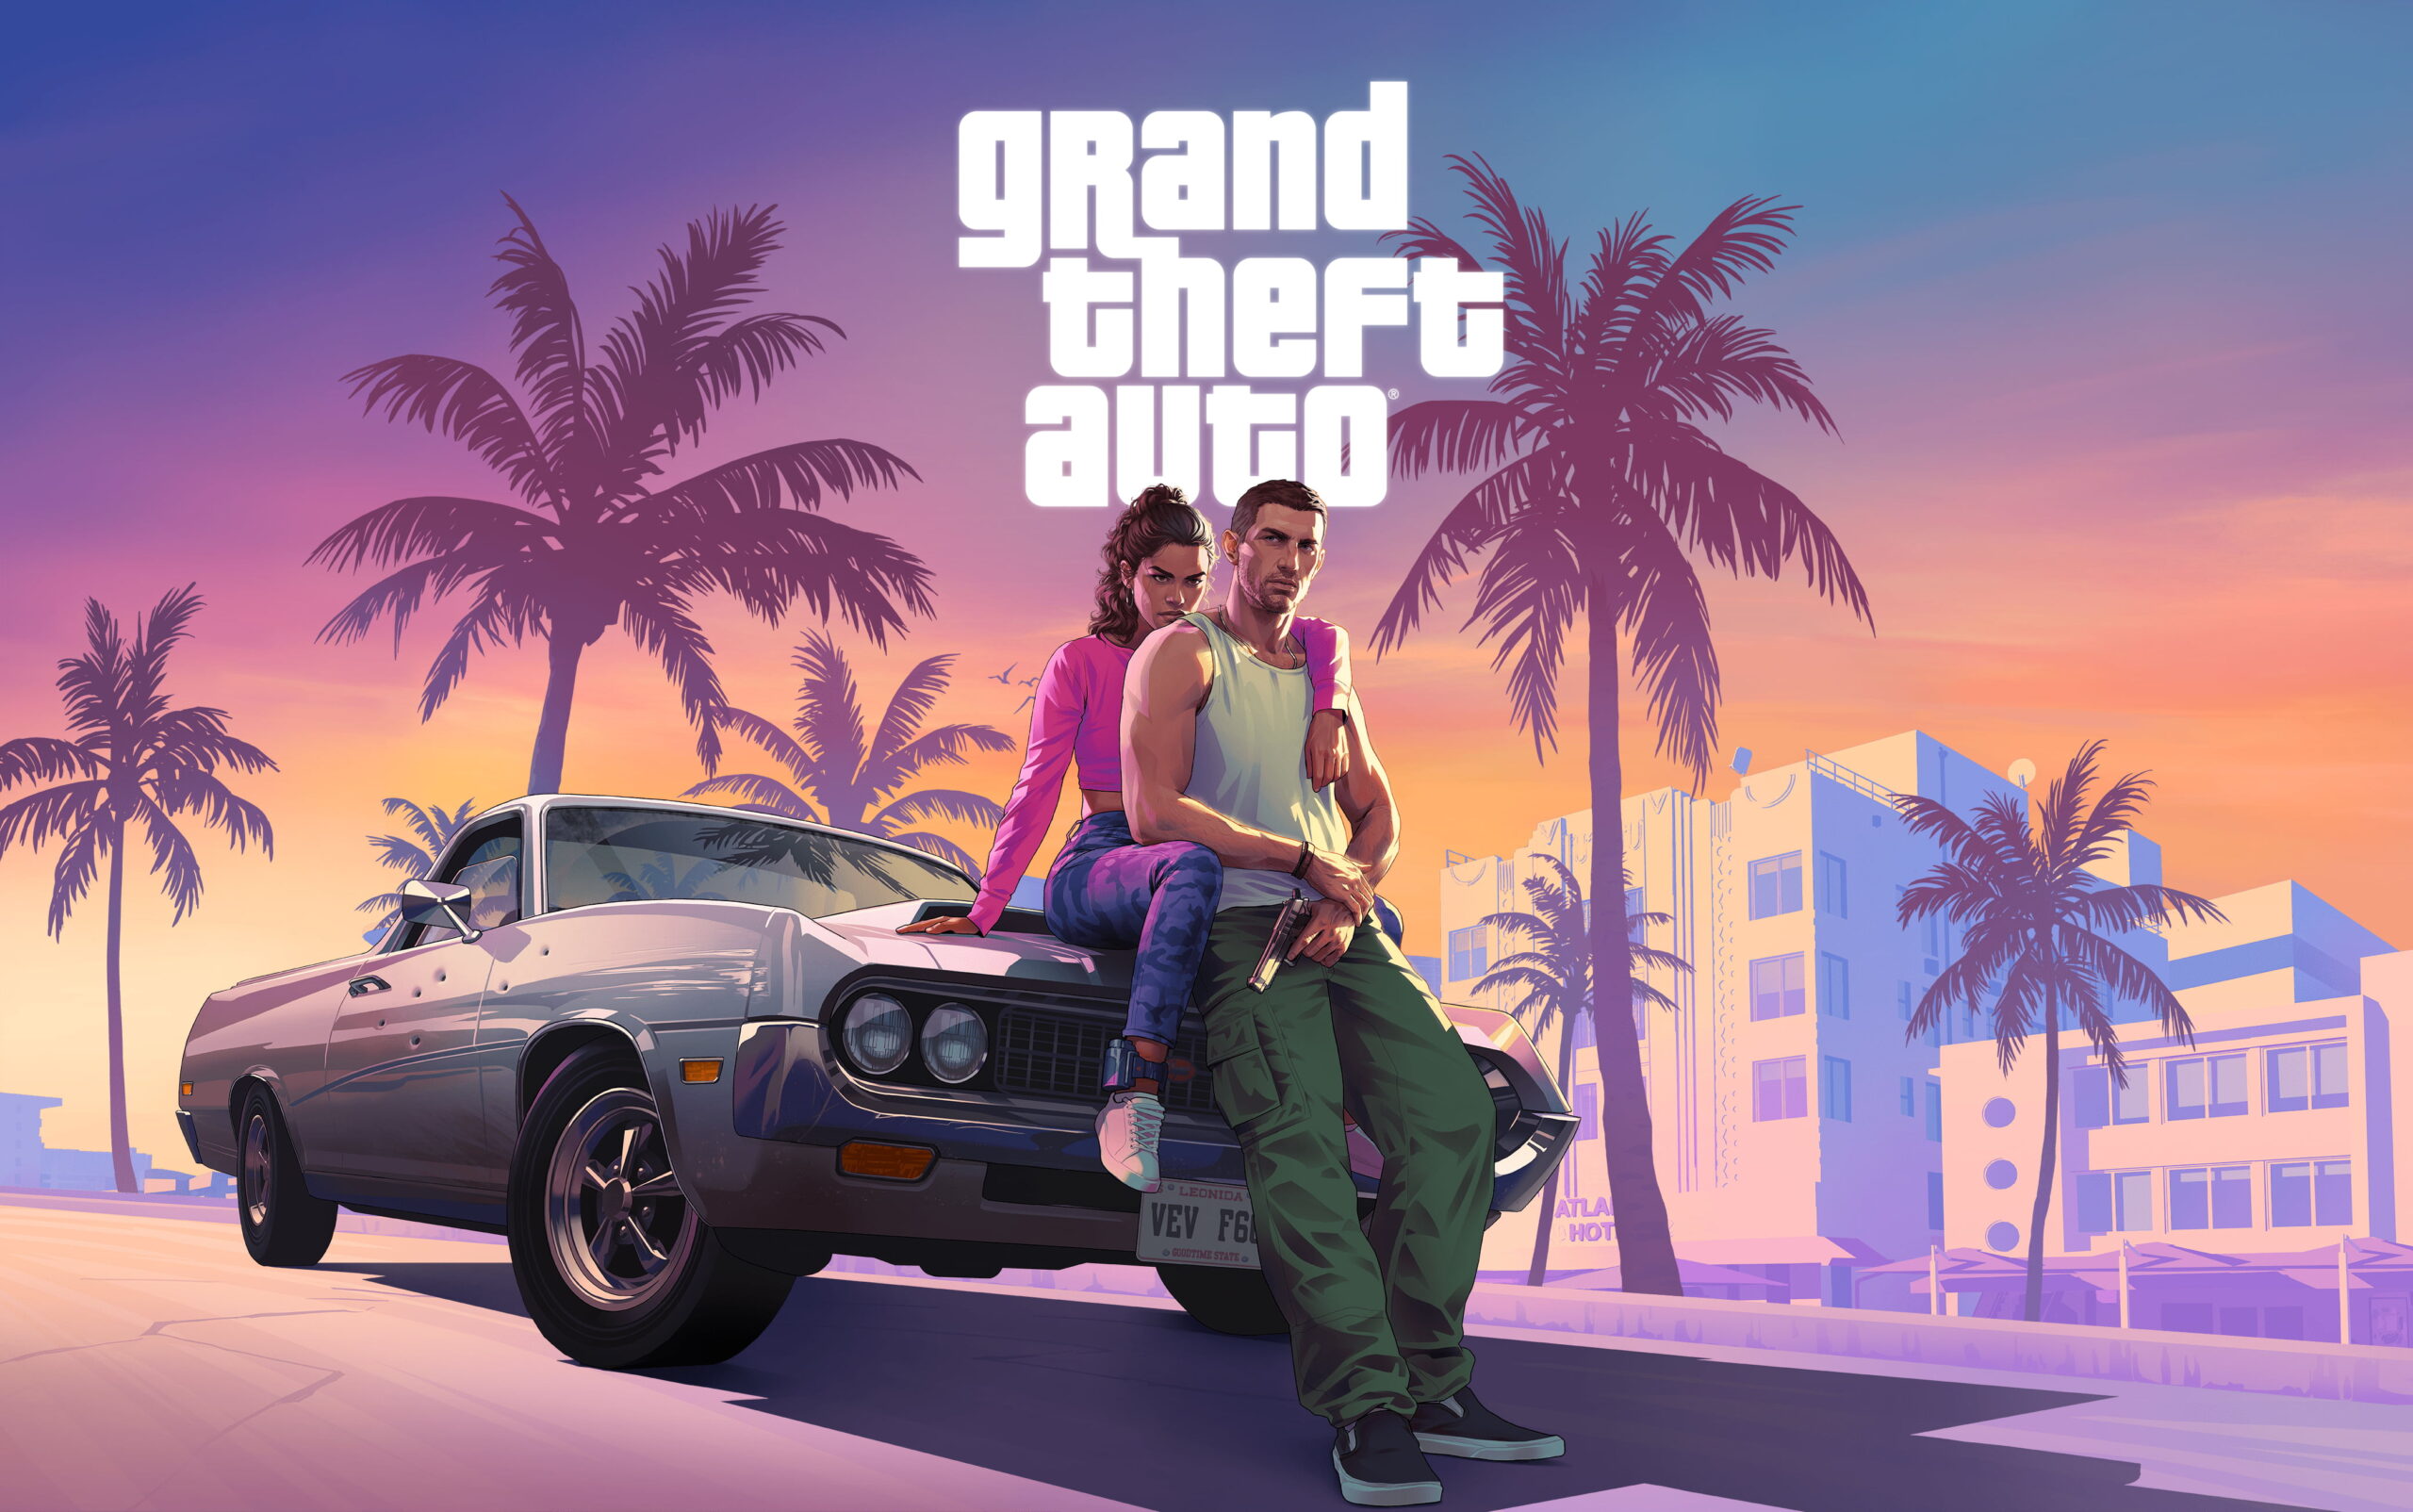 GTA VI Grand Theft Auto VI Rockstar Games Open-world Gaming Gaming Trends Virtual World Exploration Next-Gen Gaming Game Development Action-Adventure Gaming Community